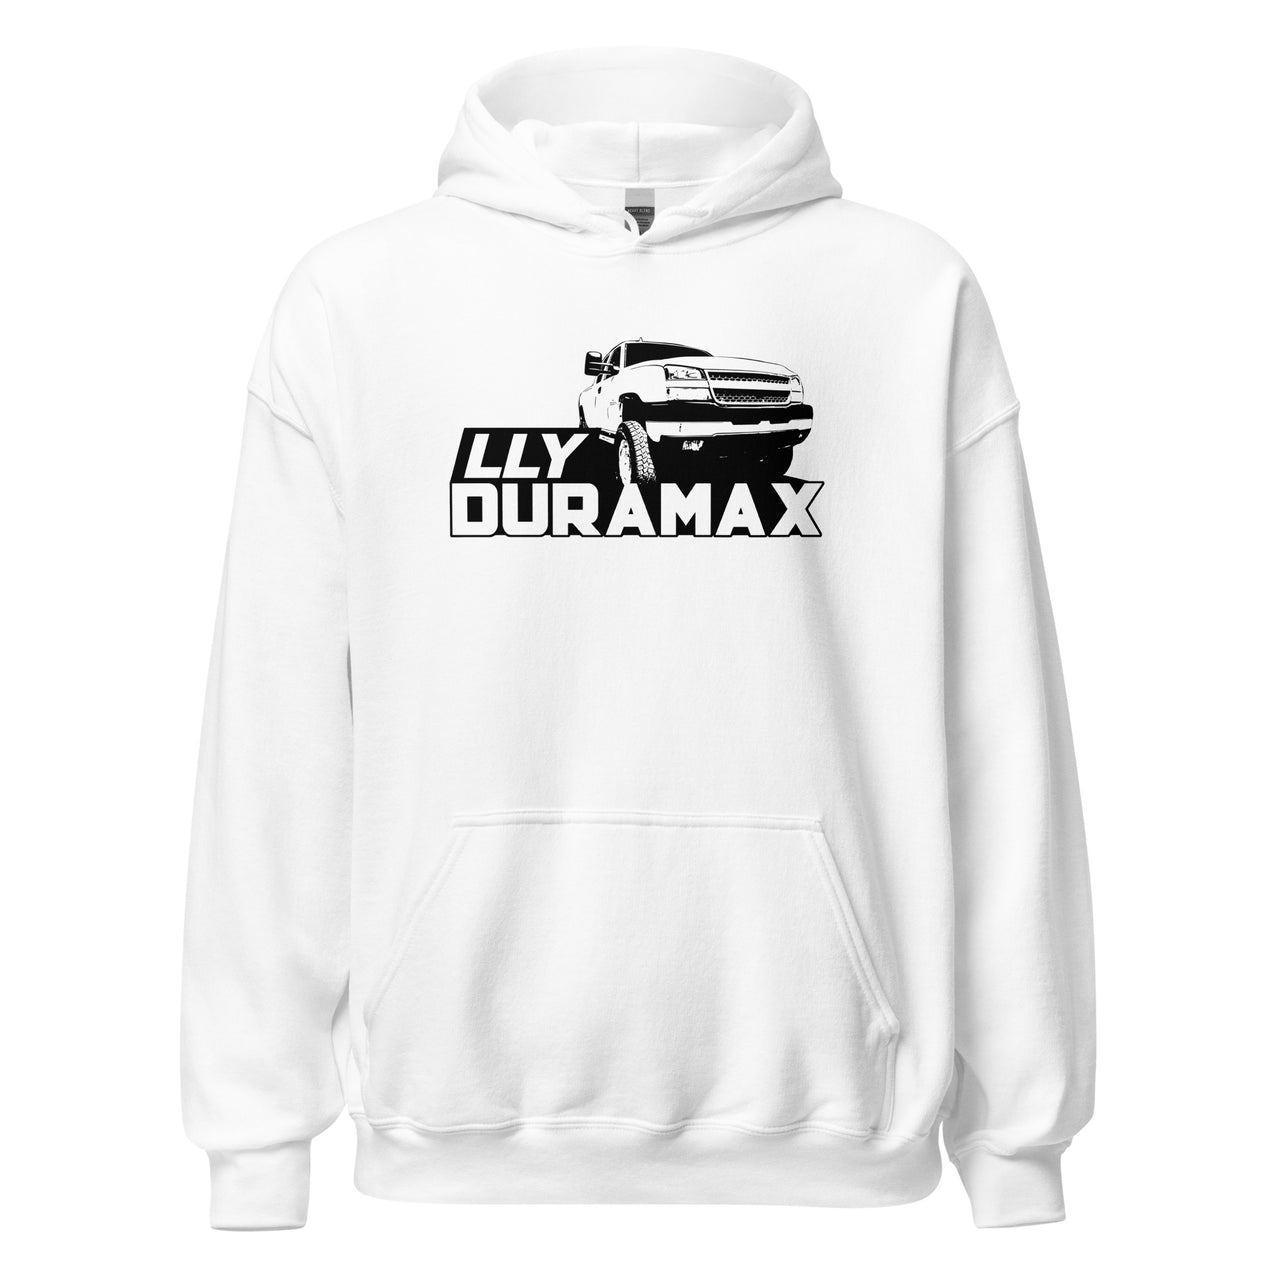 LLY Duramax Truck Hoodie Sweatshirt in white